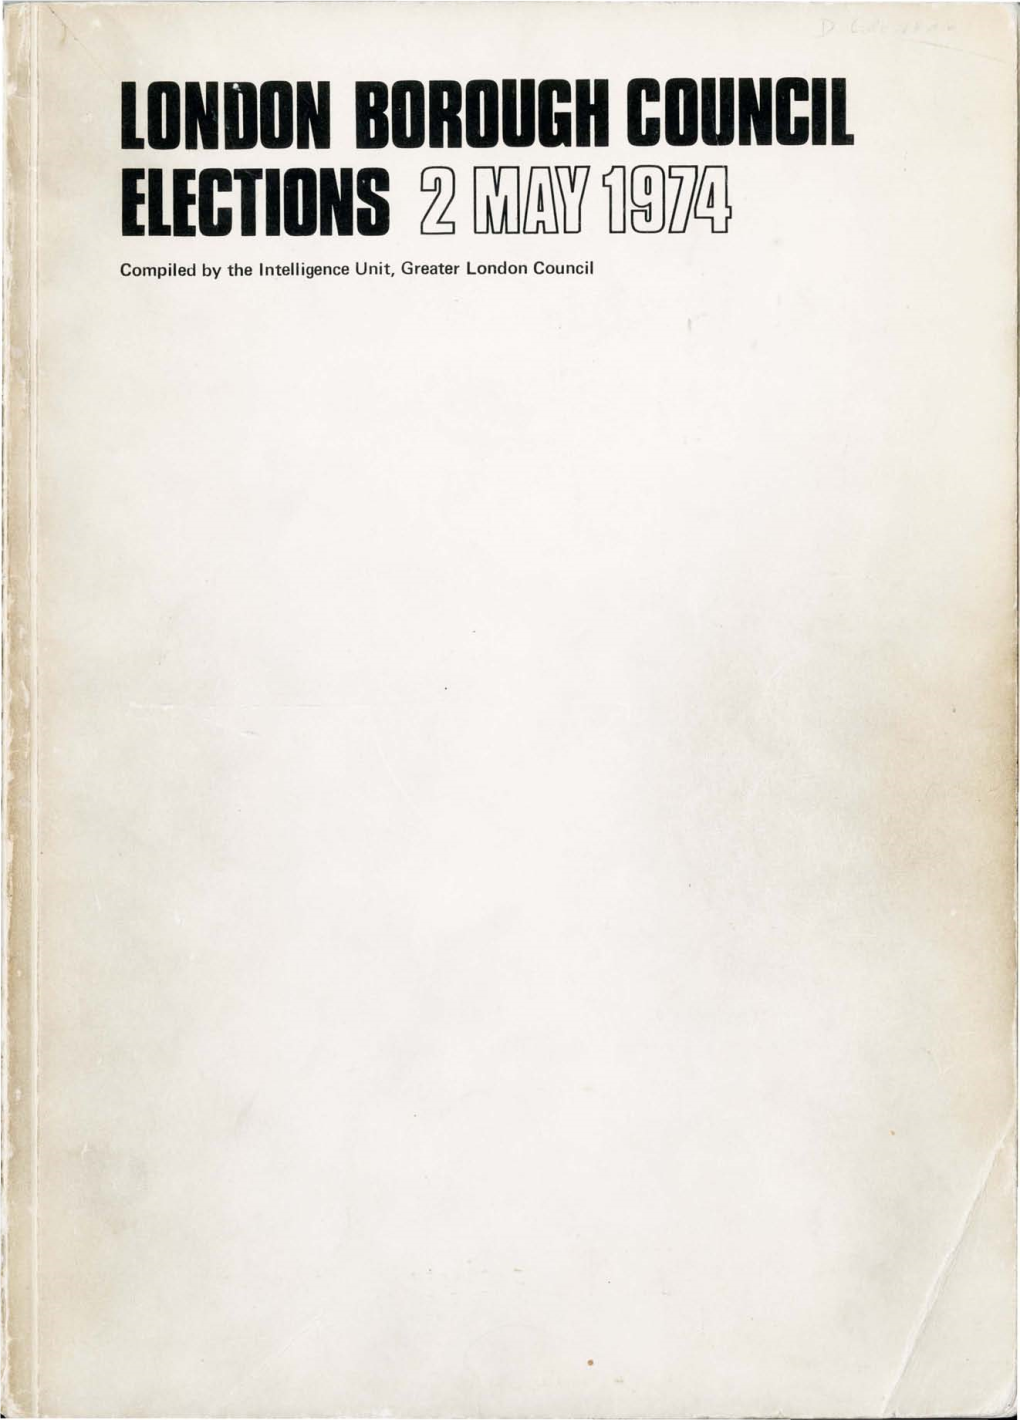 London Borough Council Elections, 2 May 1974